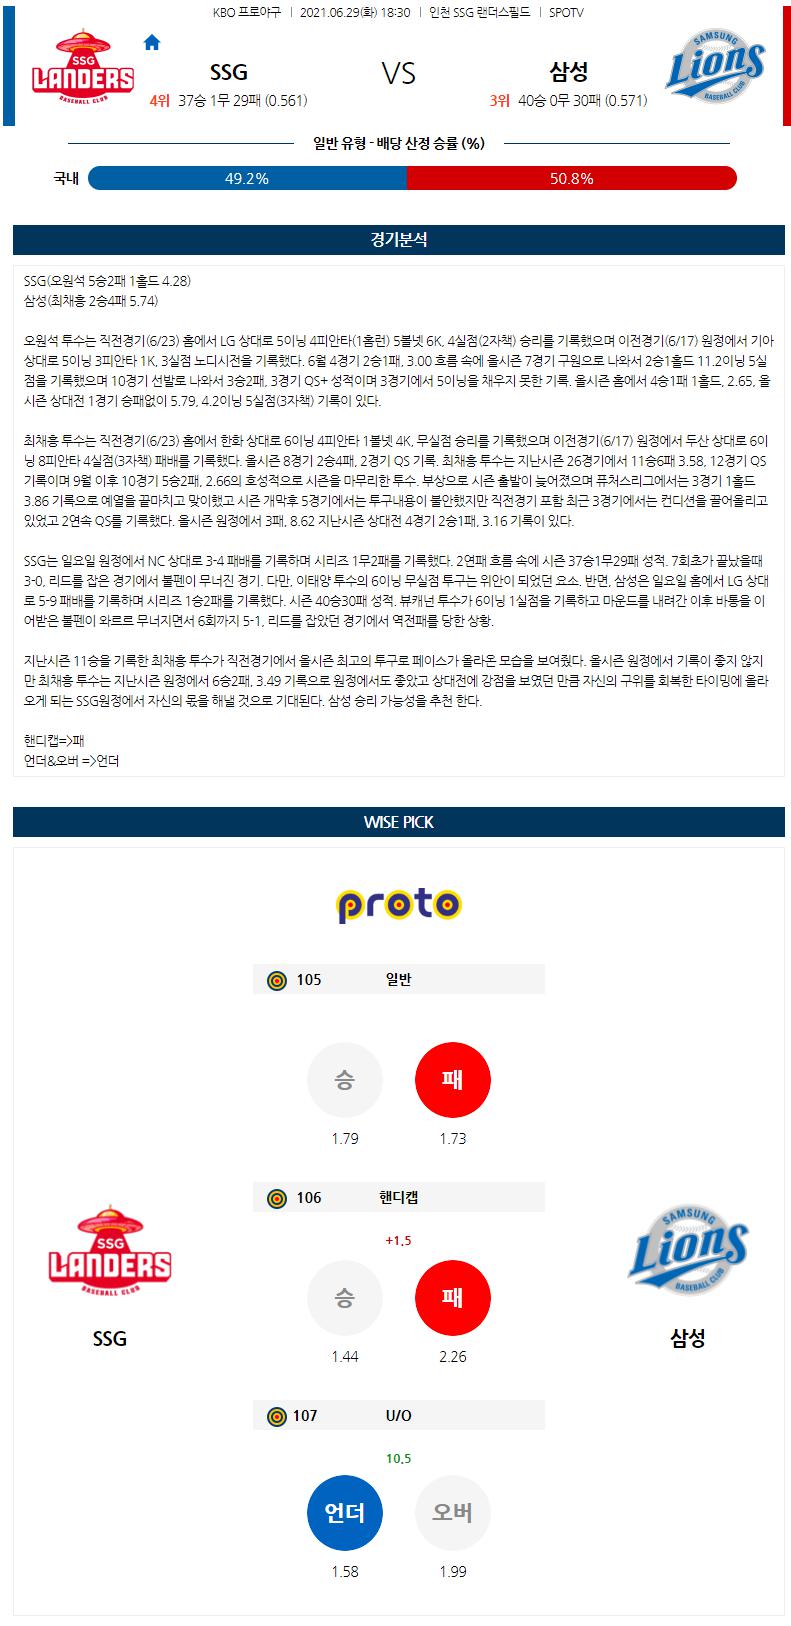 【KBO】 6월 29일 SSG vs 삼성.png